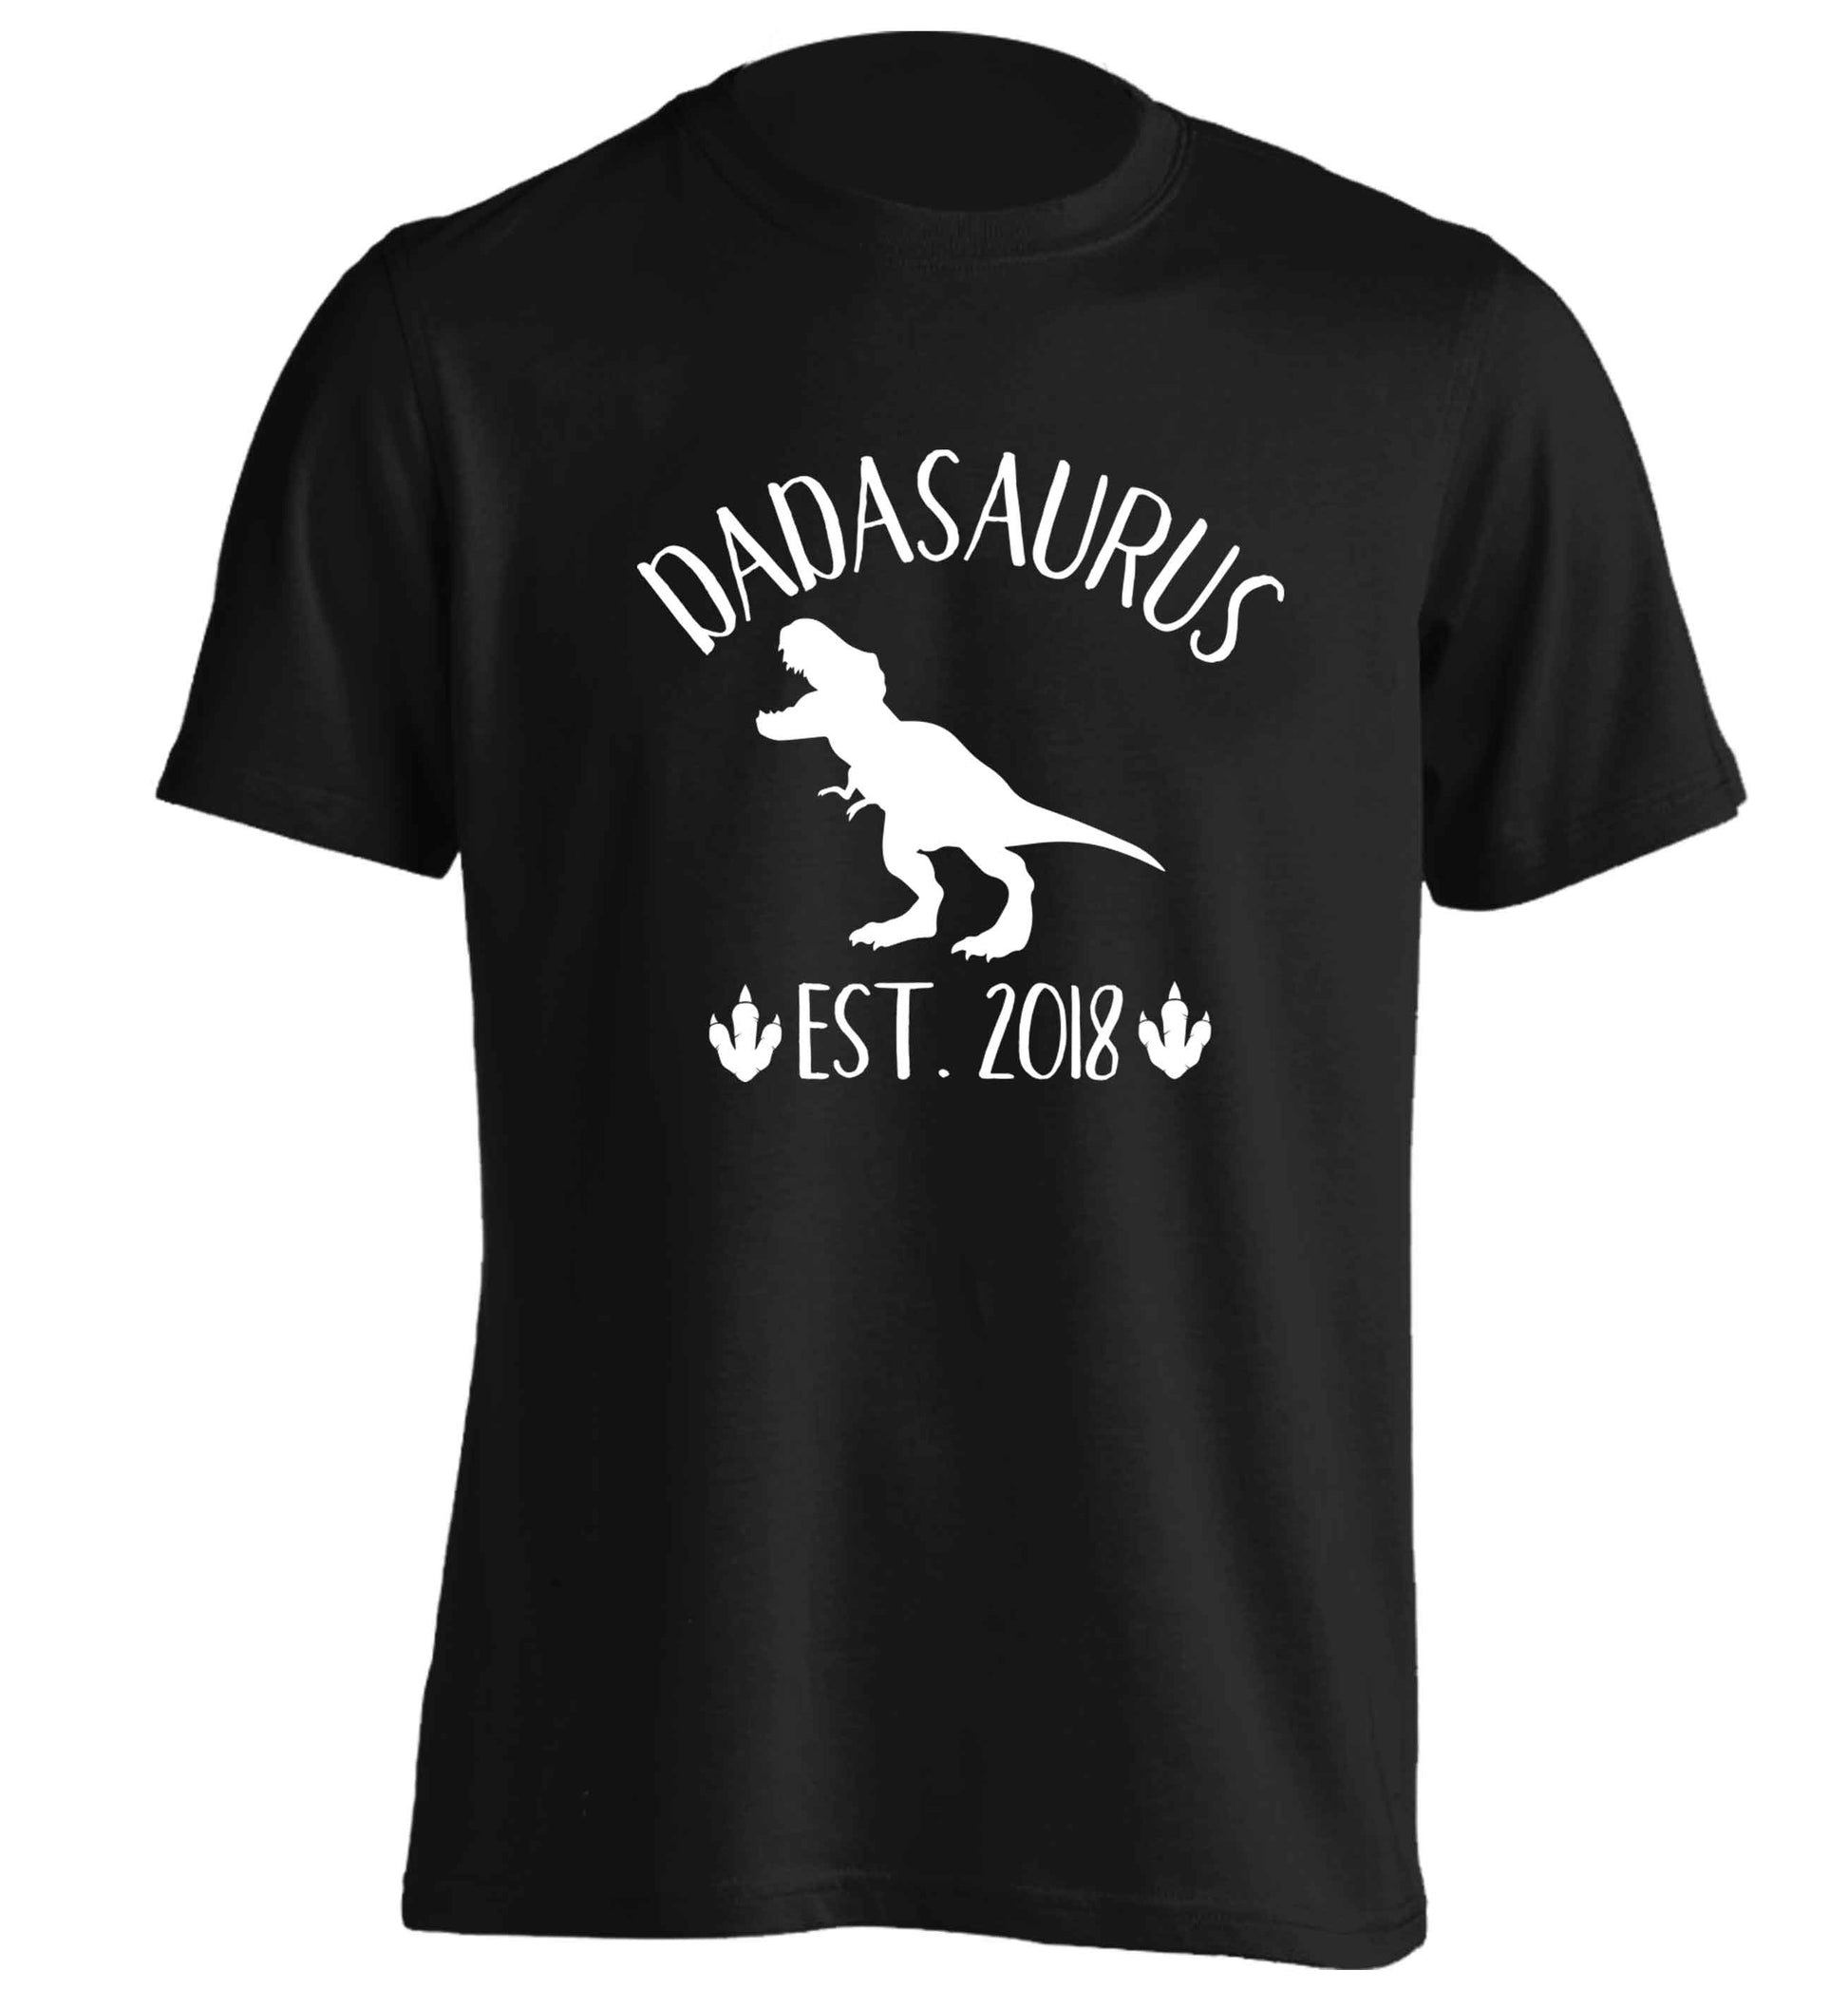 Personalised dadasaurus since (custom date) adults unisex black Tshirt 2XL